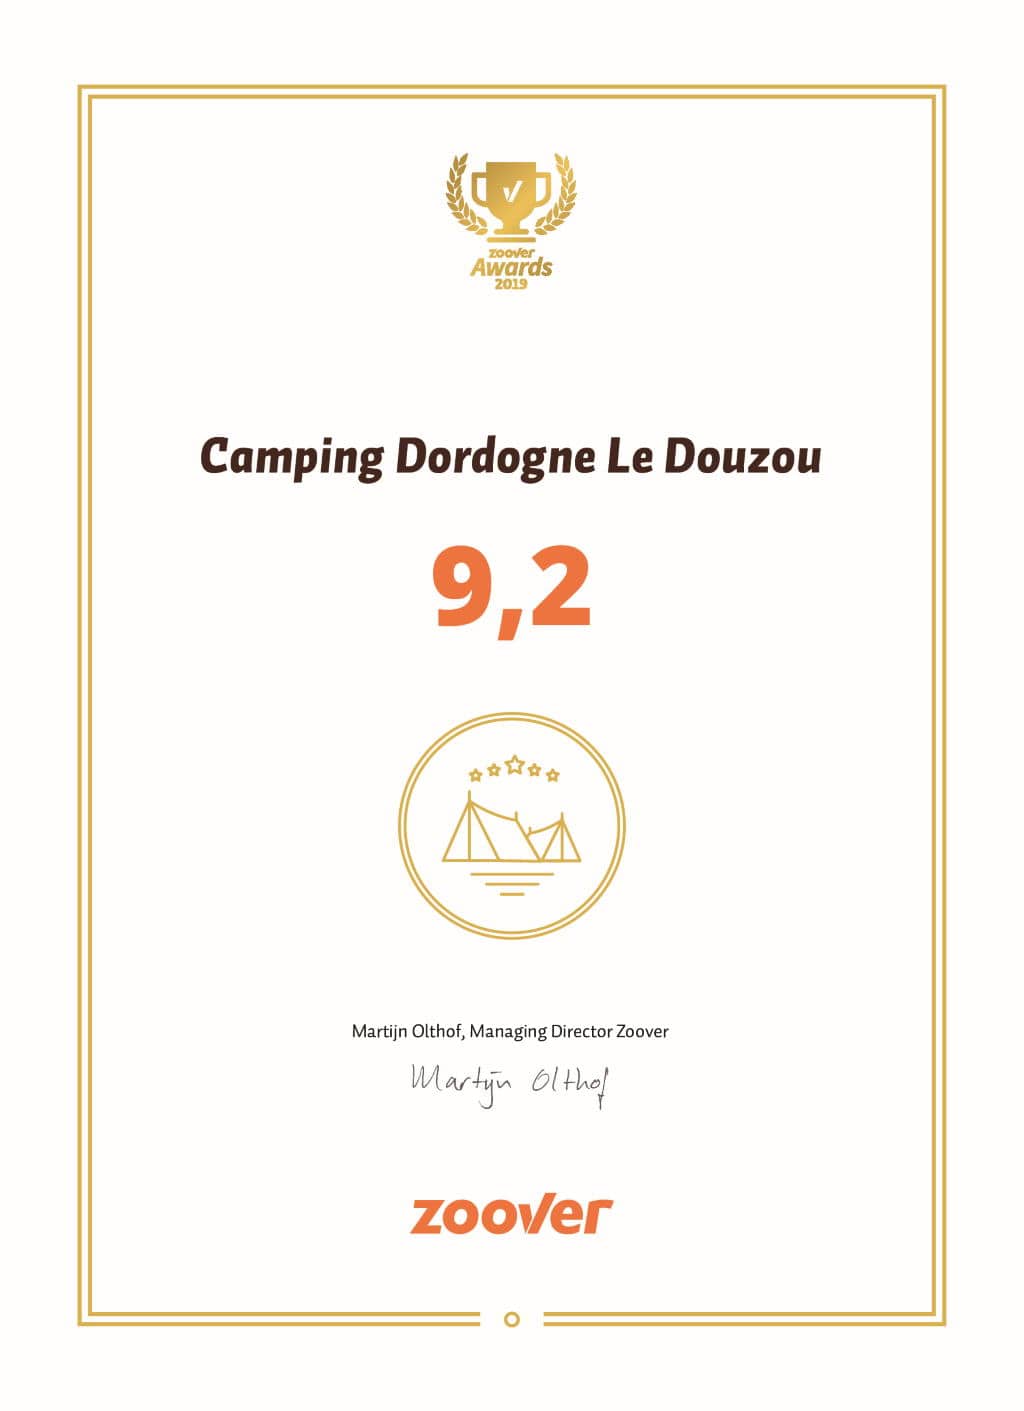 Le camping en dordogne le Douzou obtient en 2019 un zoover award gold